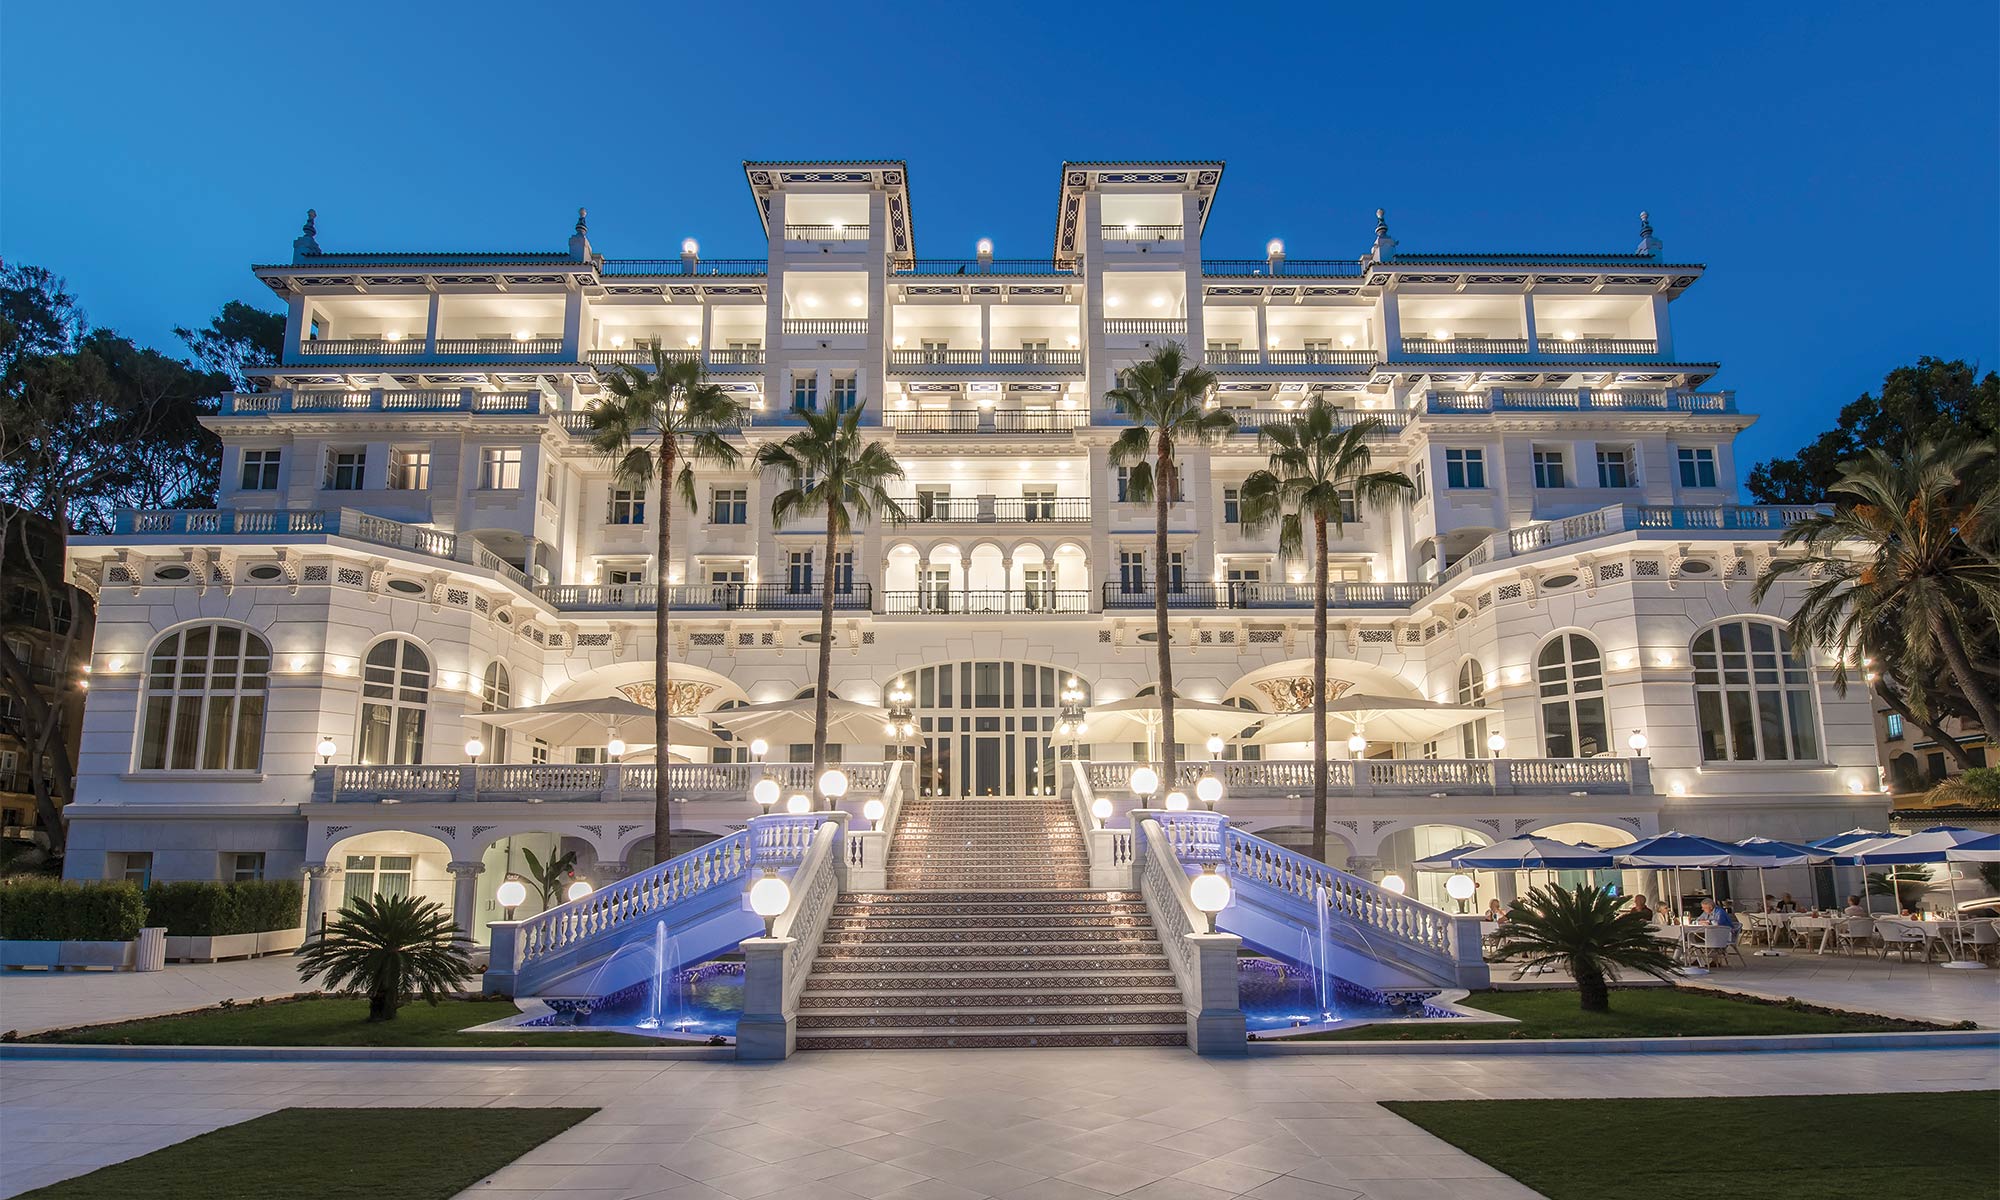 The Gran Hotel Miramar